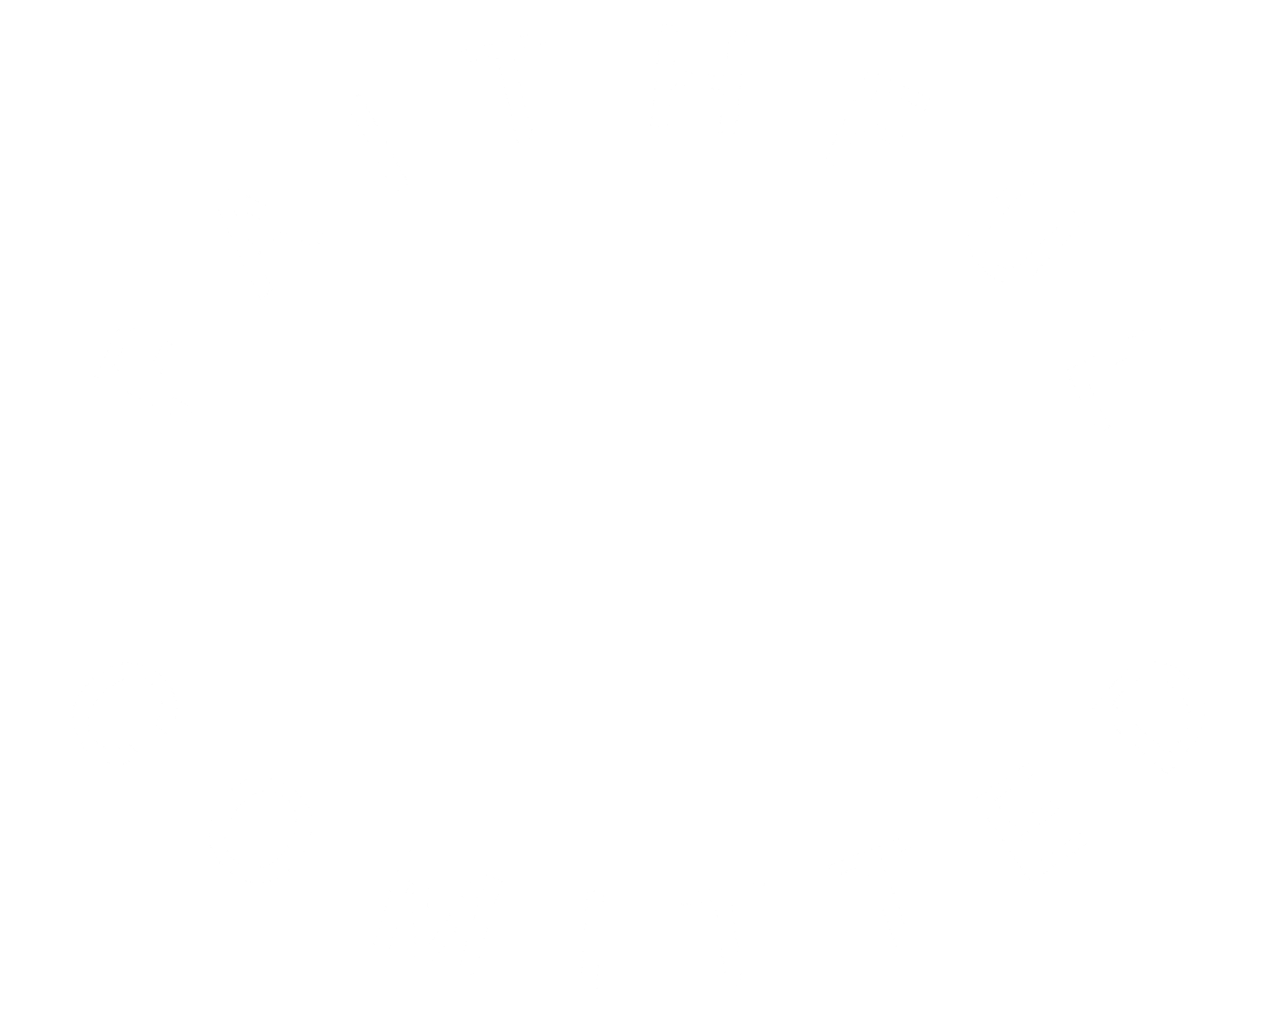 FAITHFUL's web page